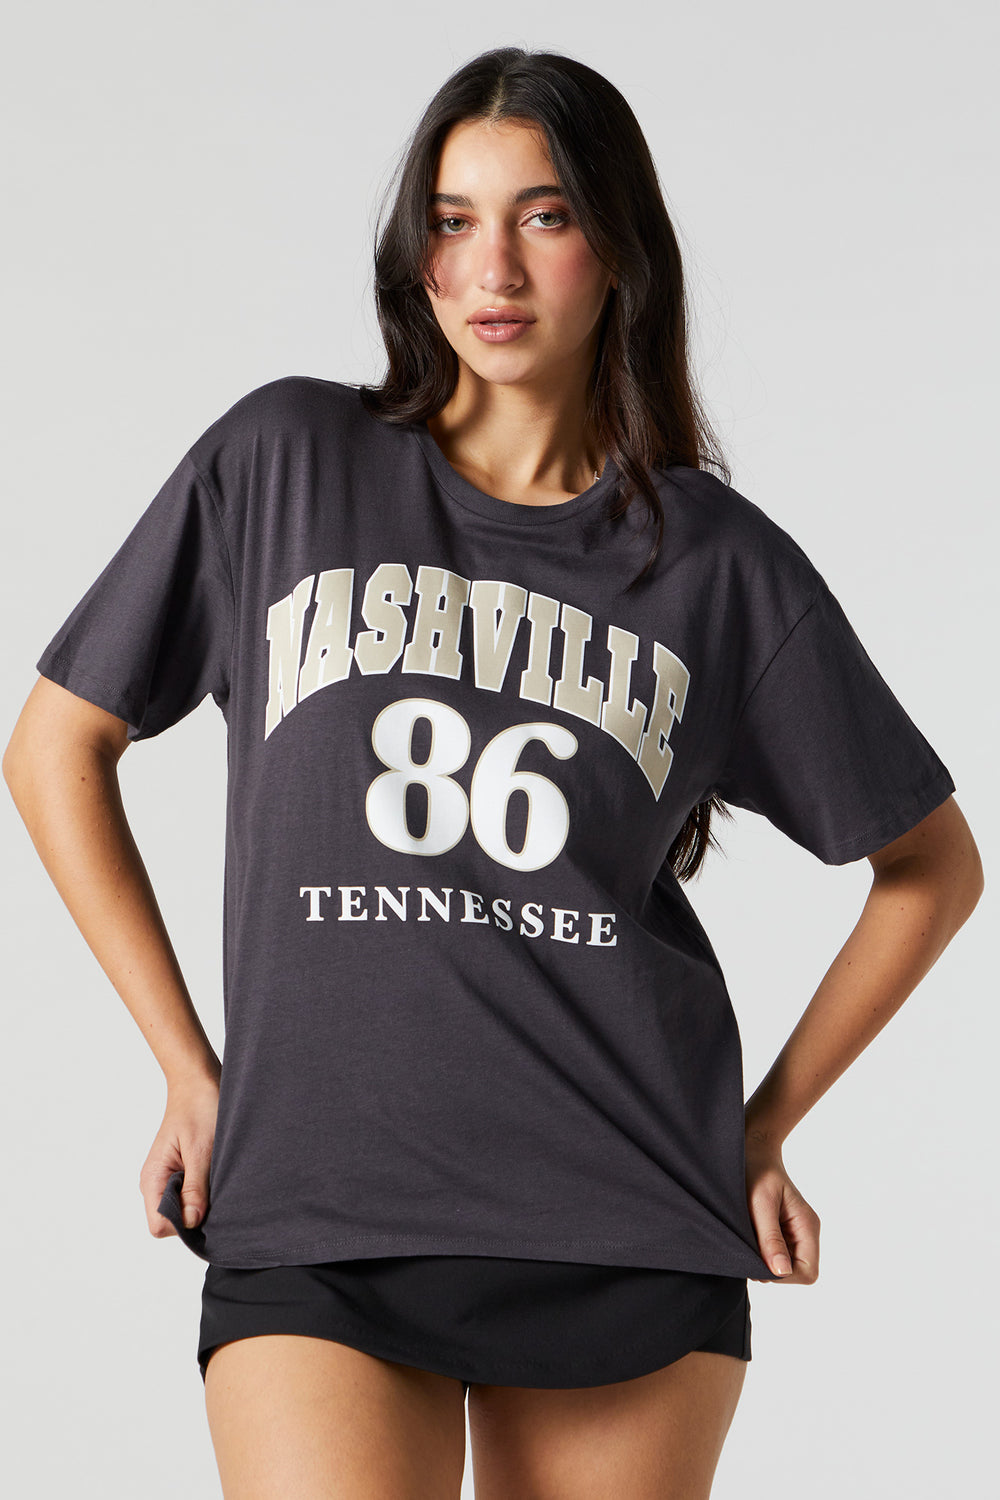 Nashville Graphic Boyfriend T-Shirt Nashville Graphic Boyfriend T-Shirt 1